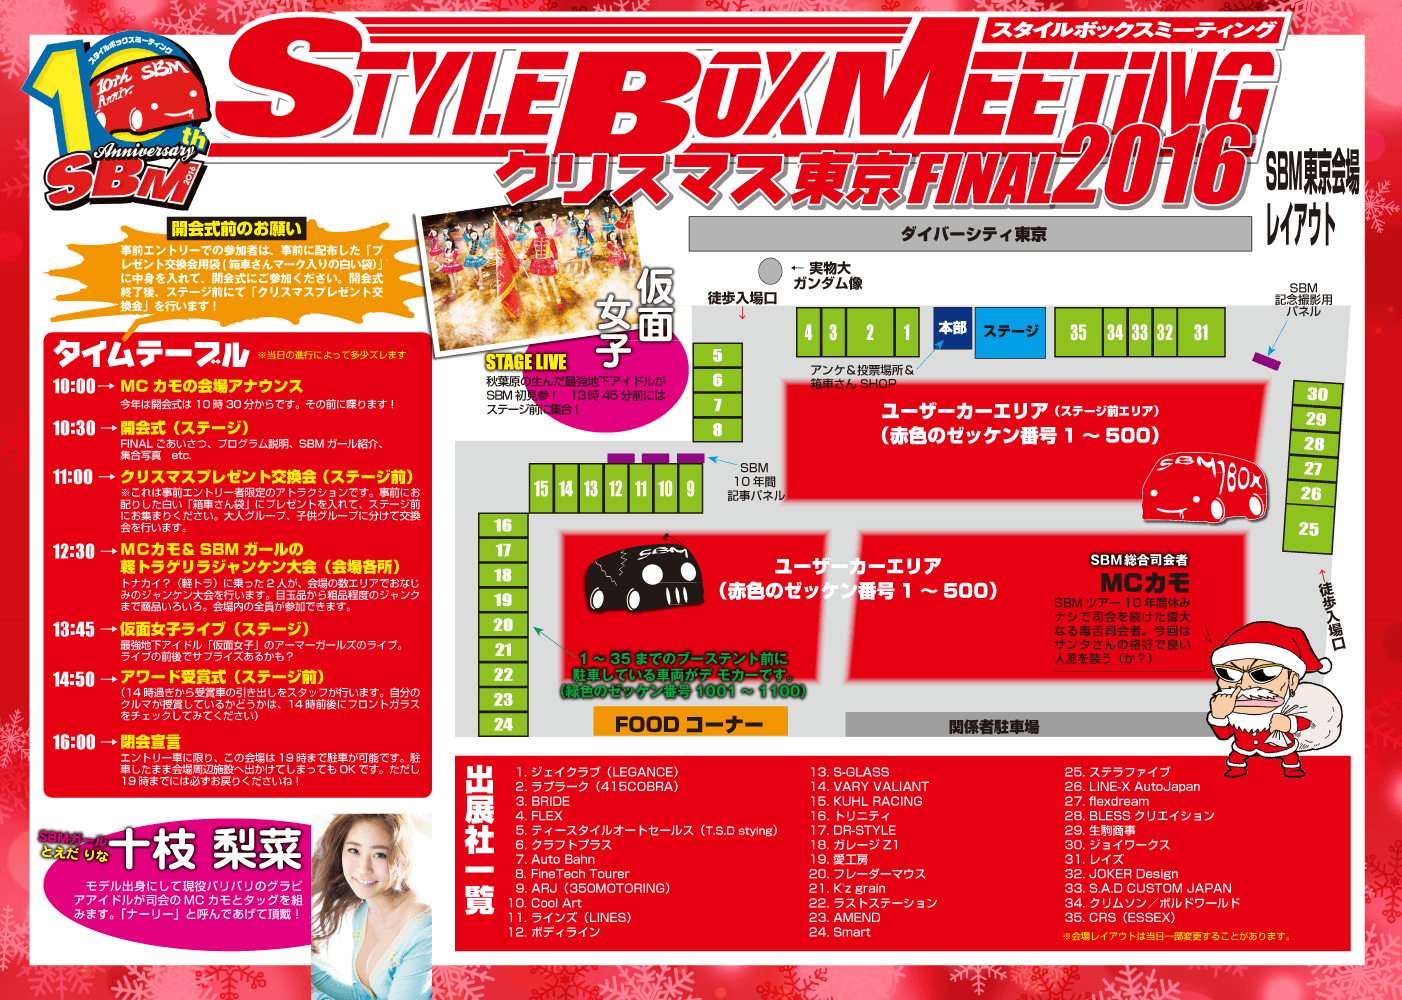 SBM（スタイルボックスミーティング）2016ファイナル 東京お台場 会場レイアウト